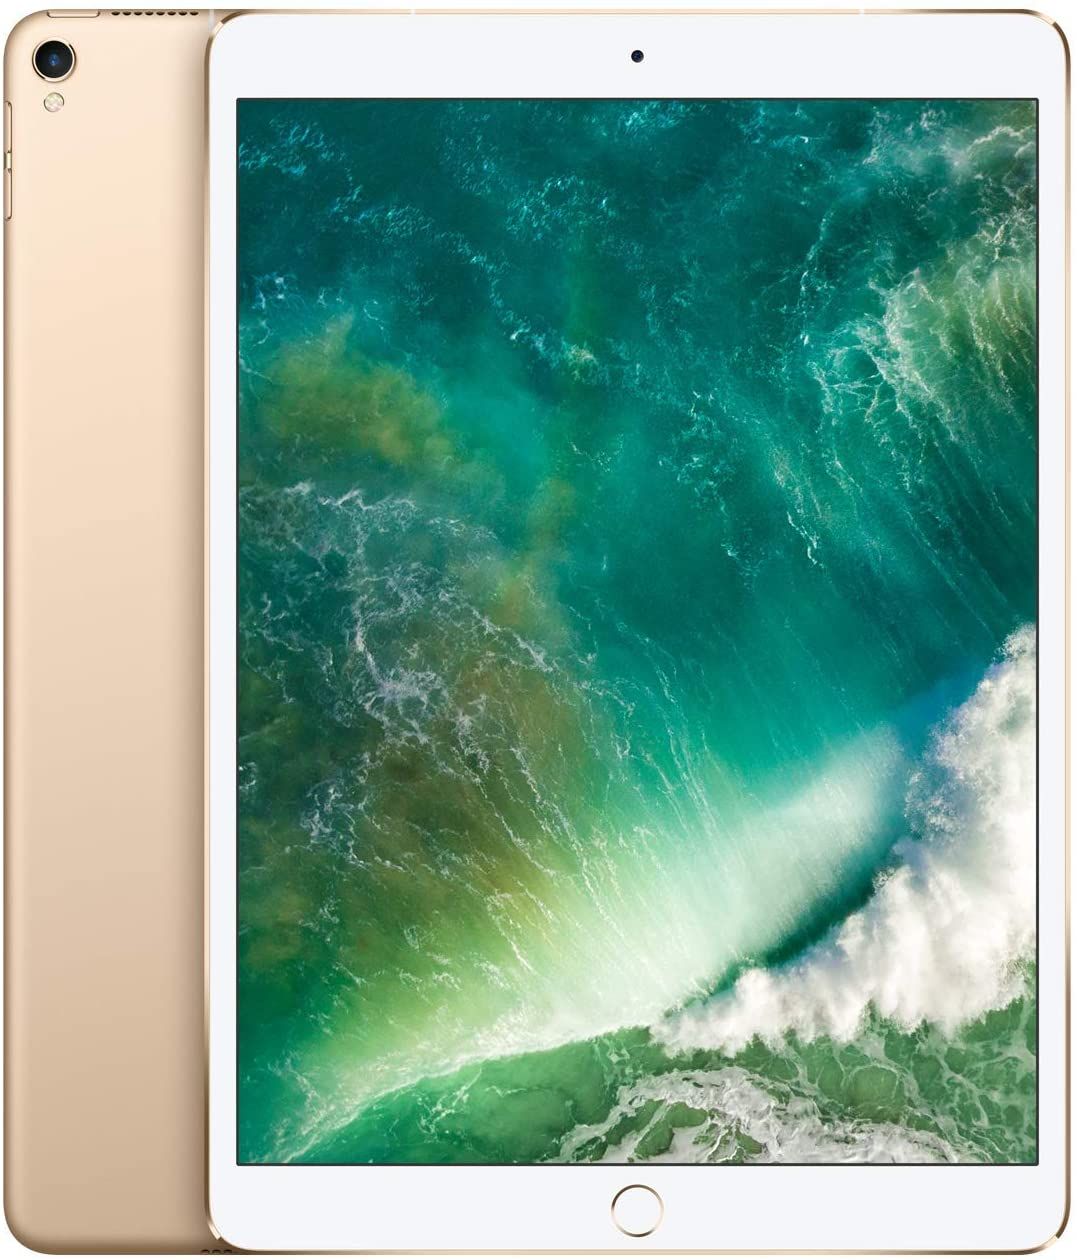 Apple iPad Pro at its lowest Amazon price yet